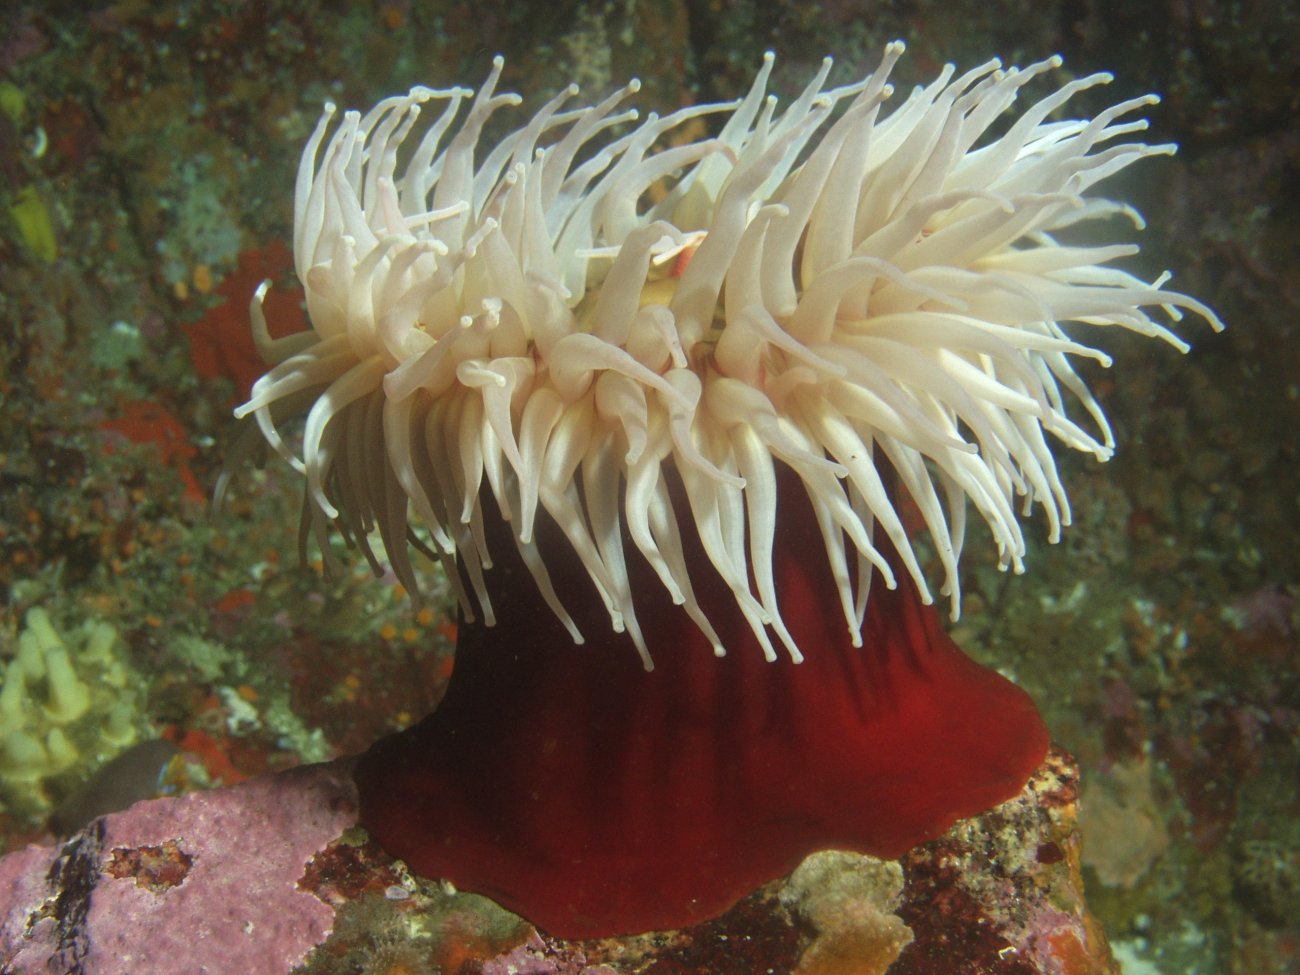 Fish eating sea anemone (Urticina piscivora) on boulder in rocky habitatat 31 meters depth